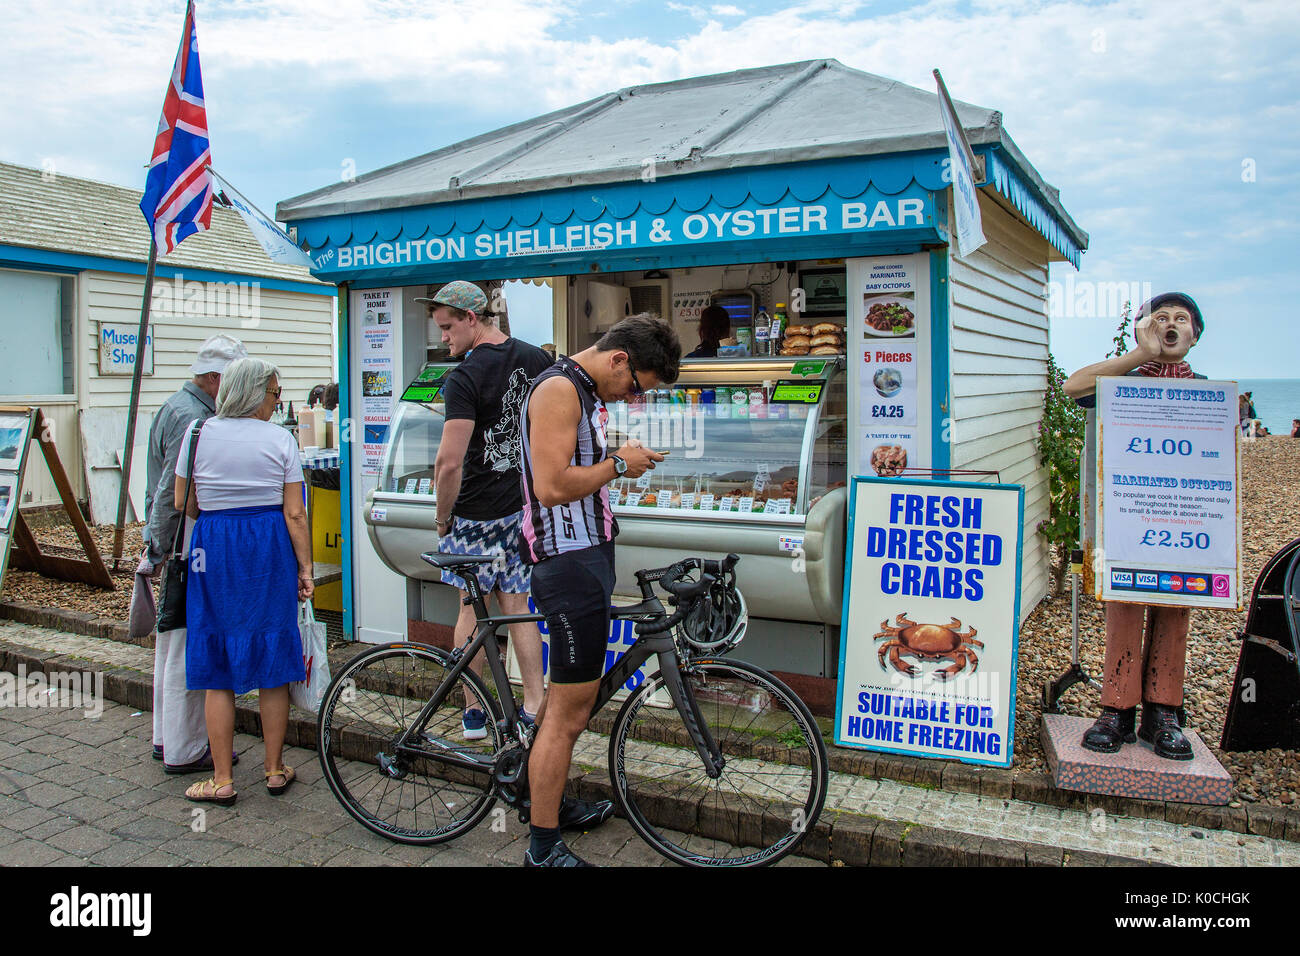 Seafood Bar, Brighton, REINO UNIDO Foto de stock